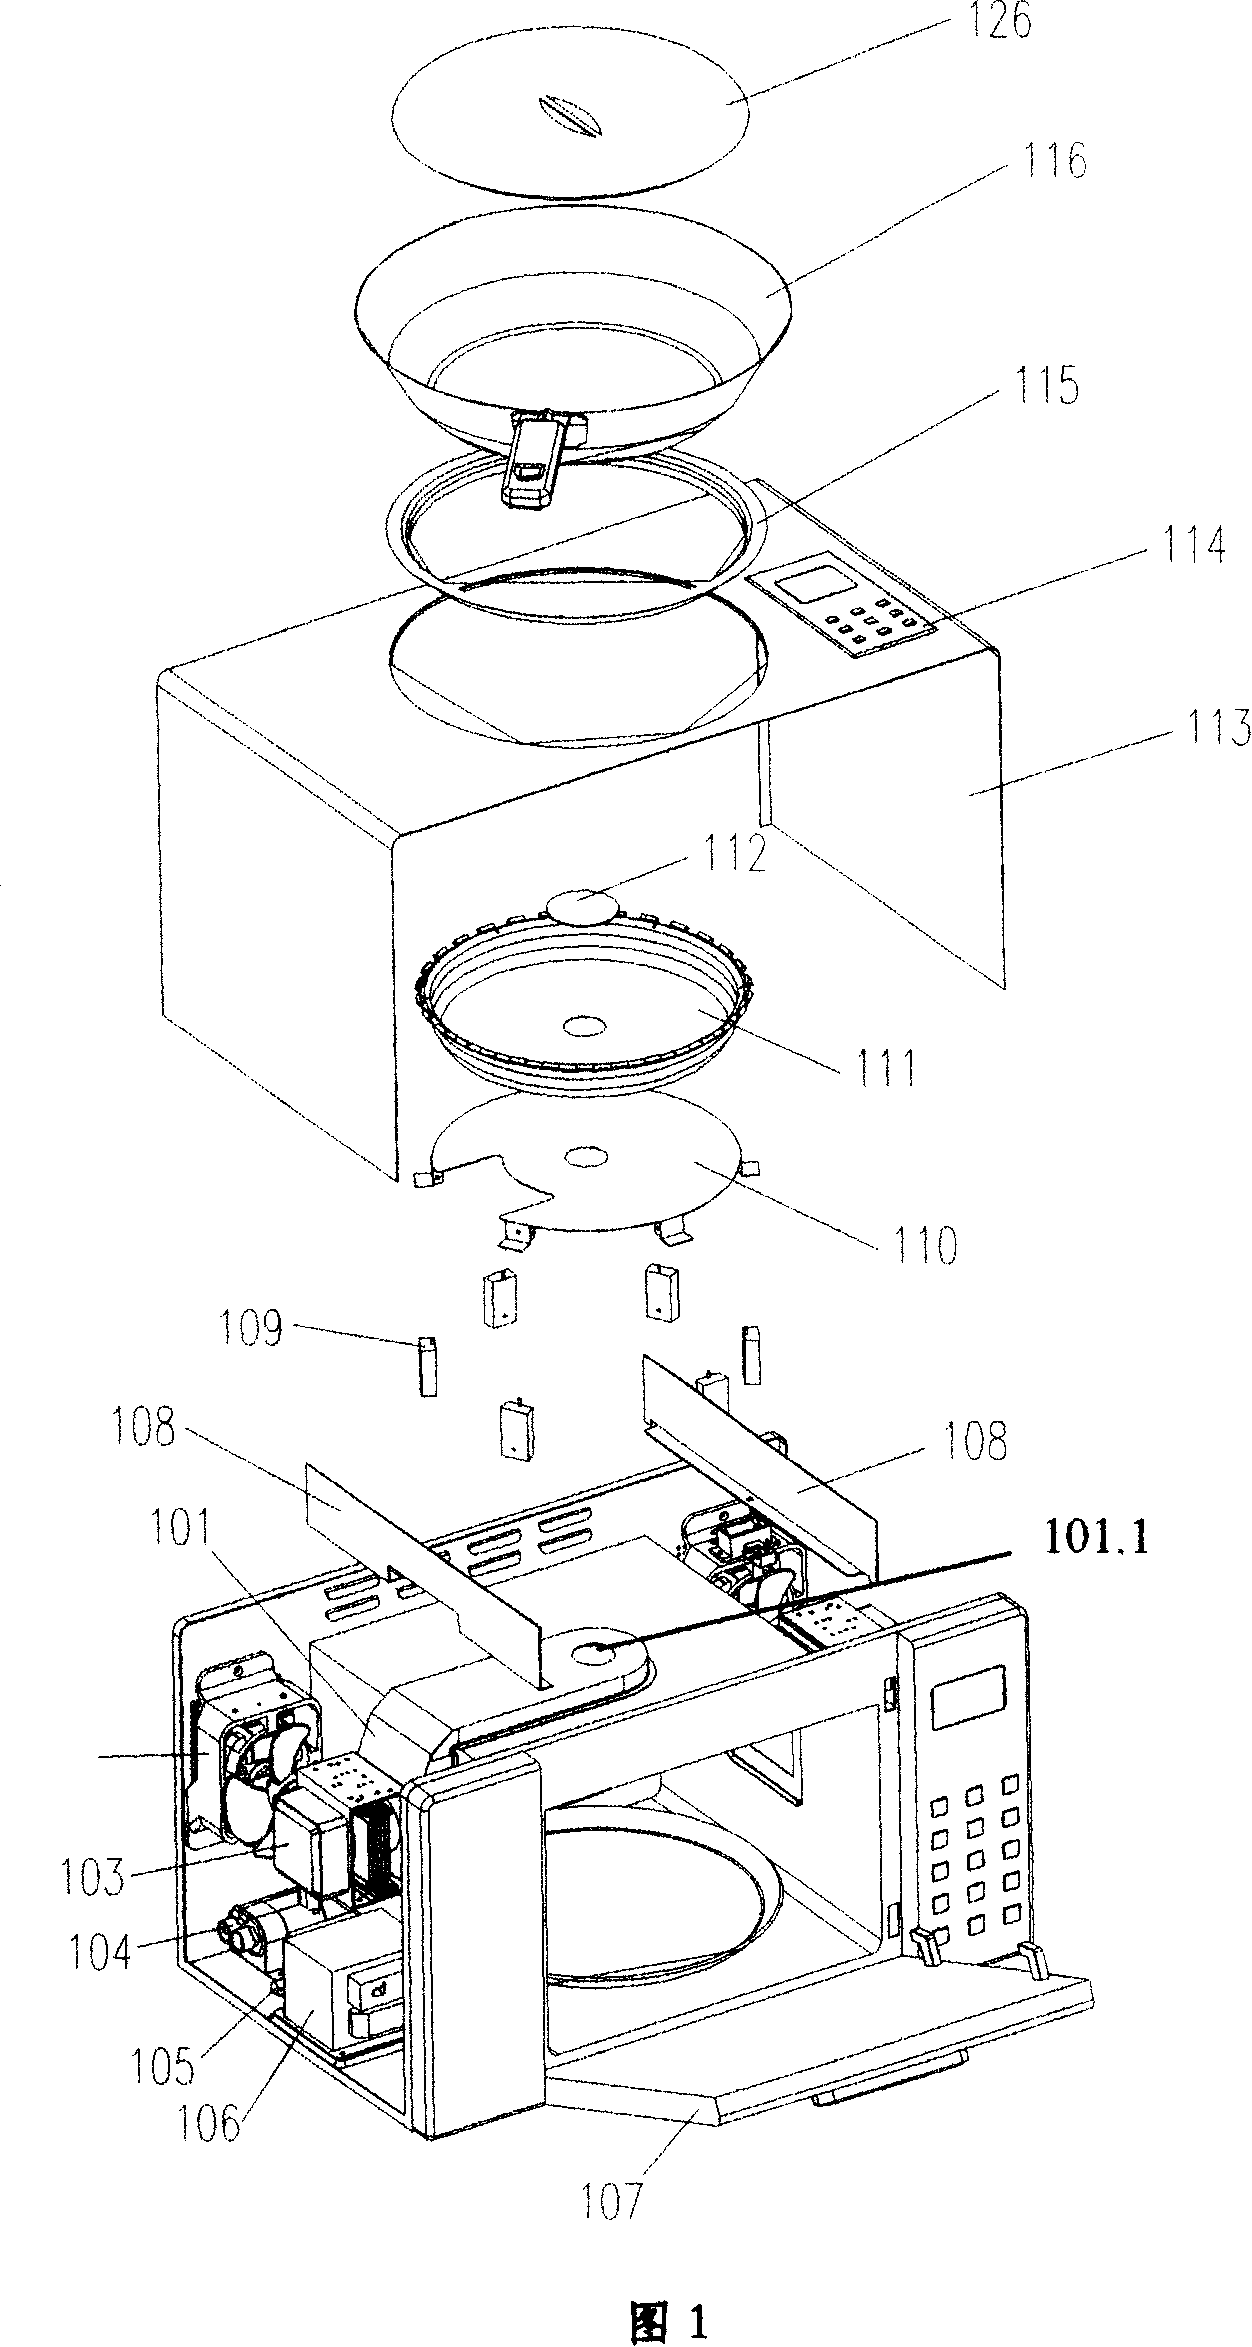 Microwave range using microwave as heating source